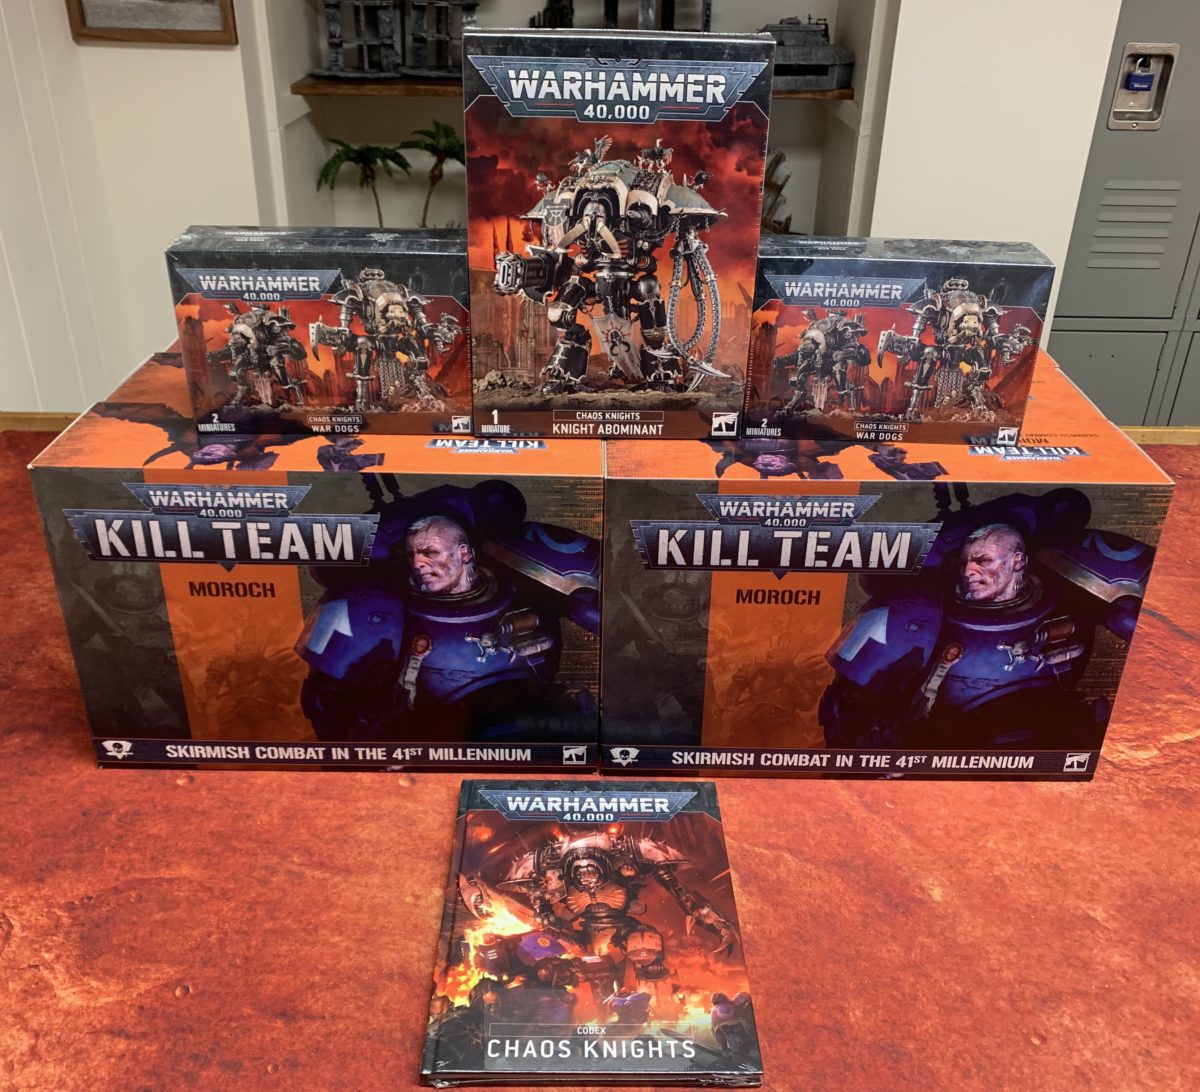 New Kill Team and Chaos Knights